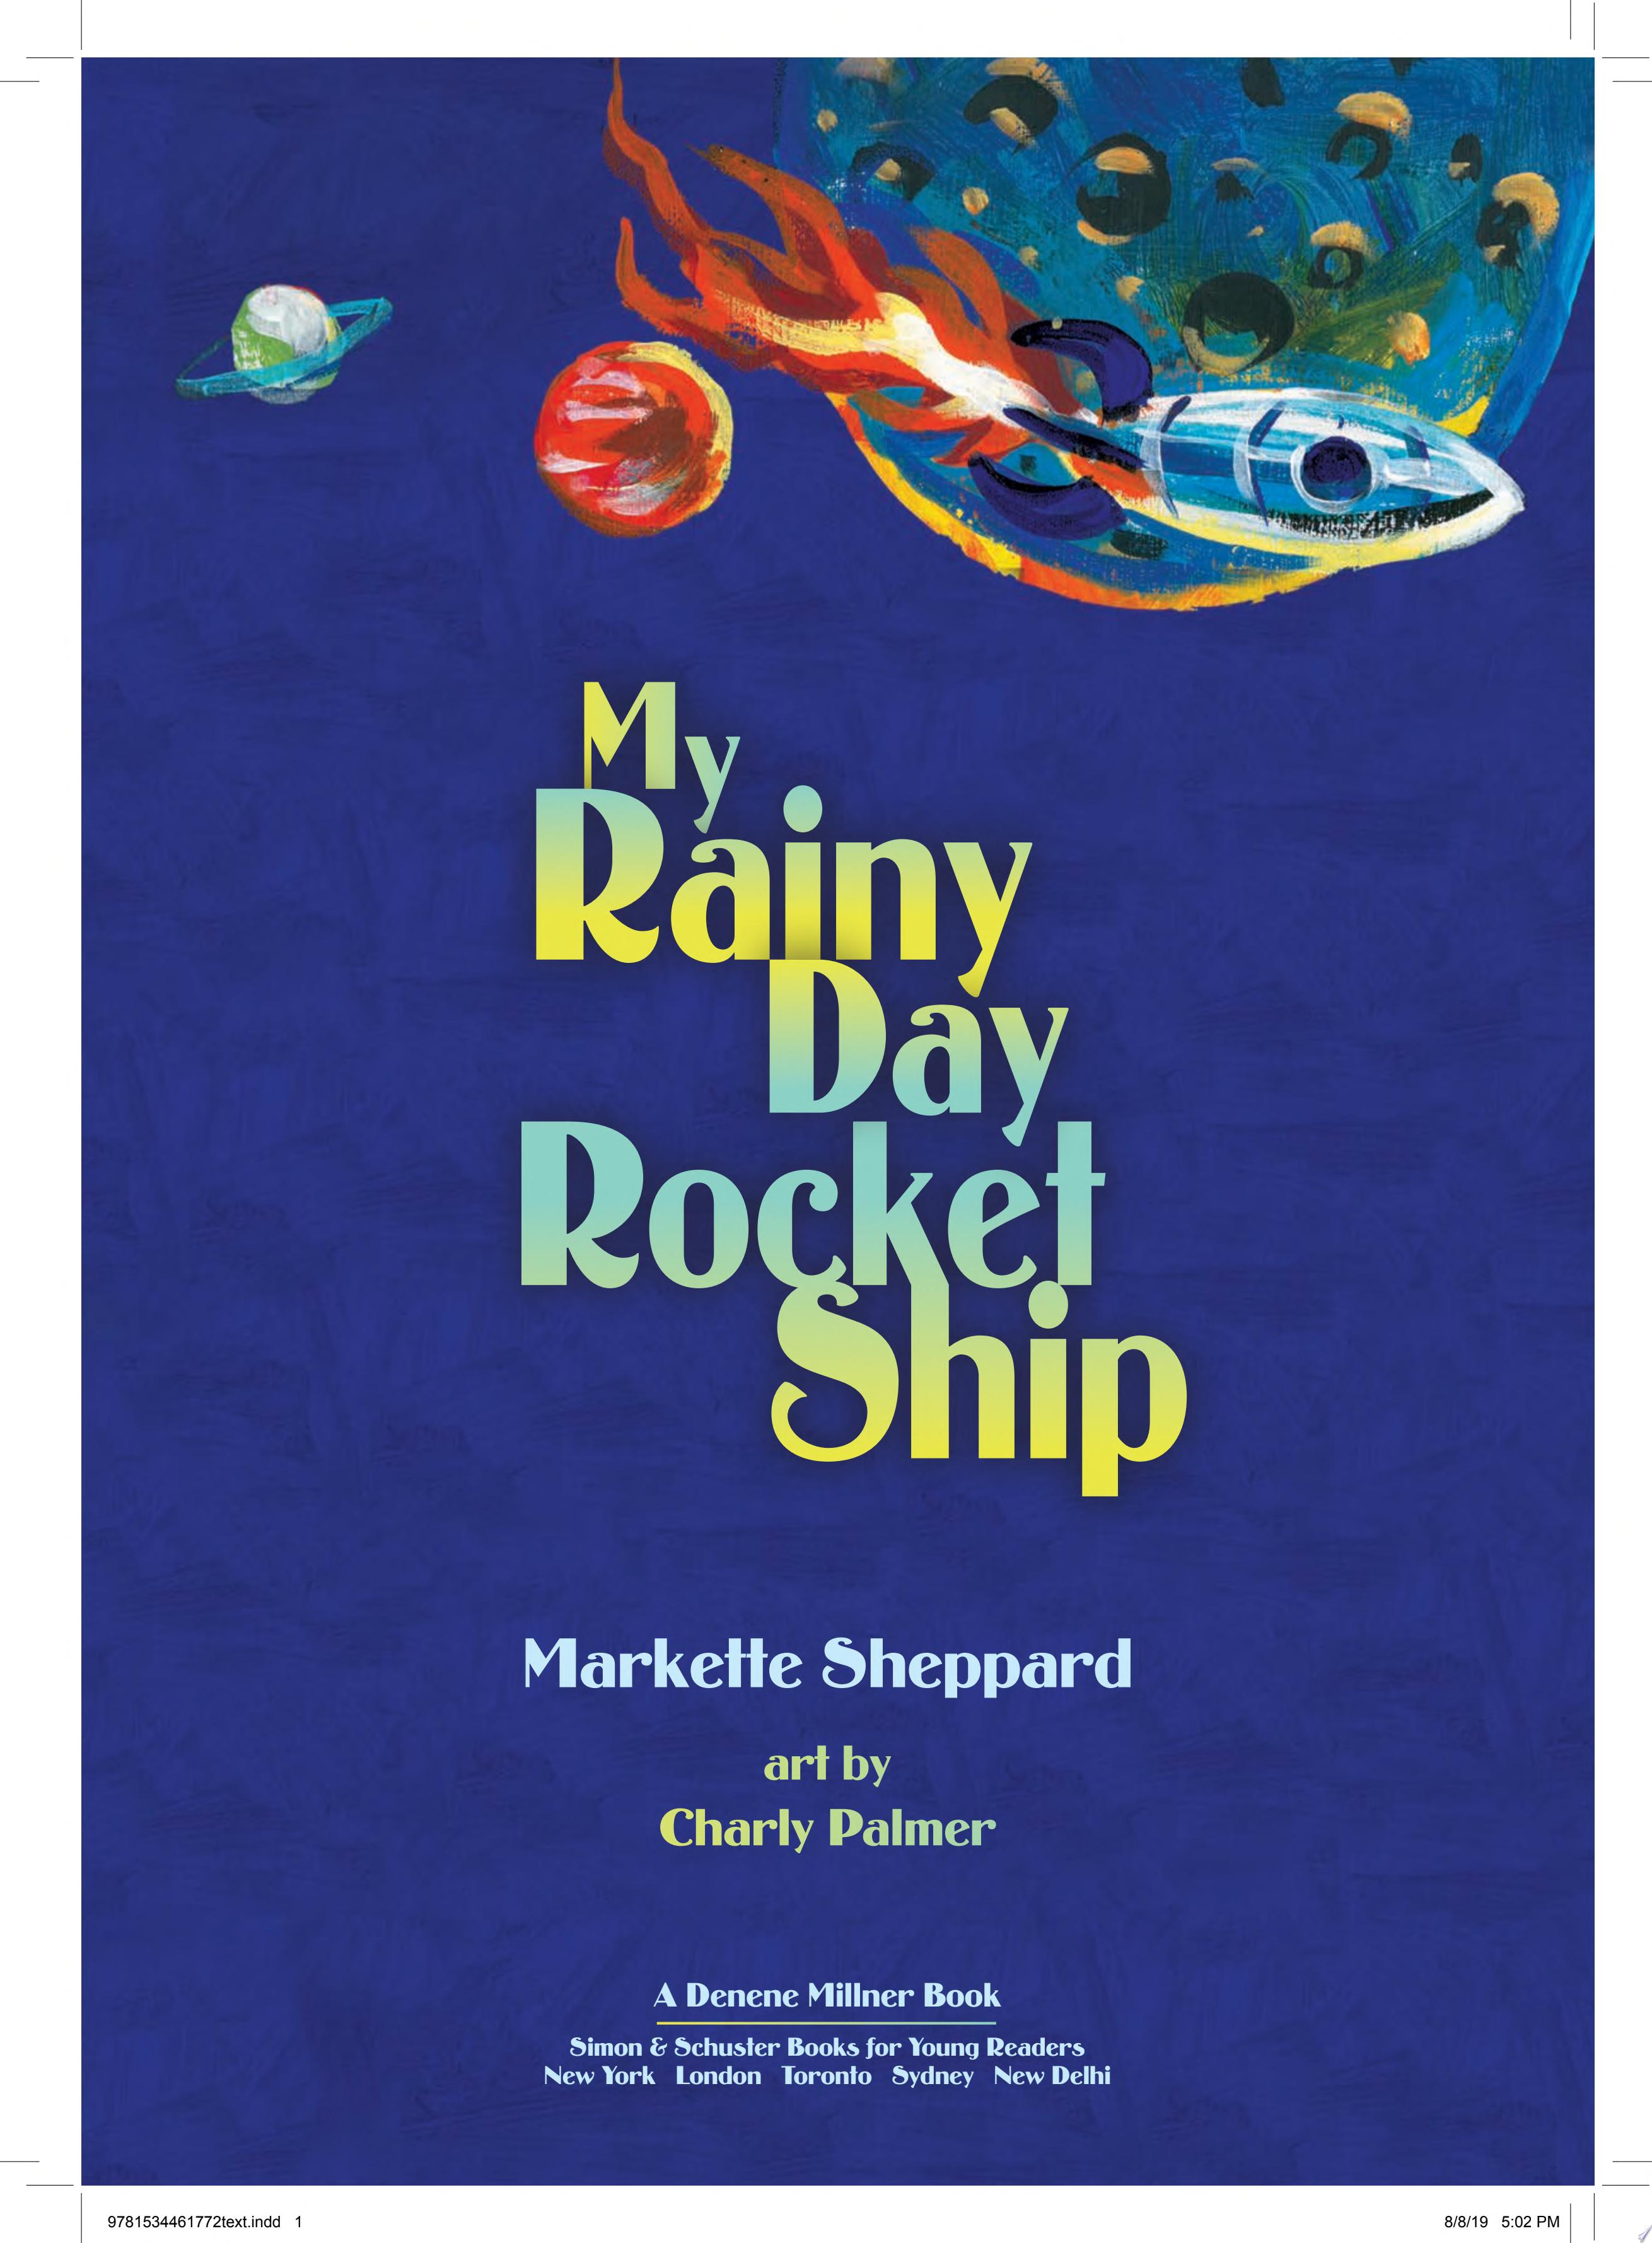 Image for "My Rainy Day Rocket Ship"